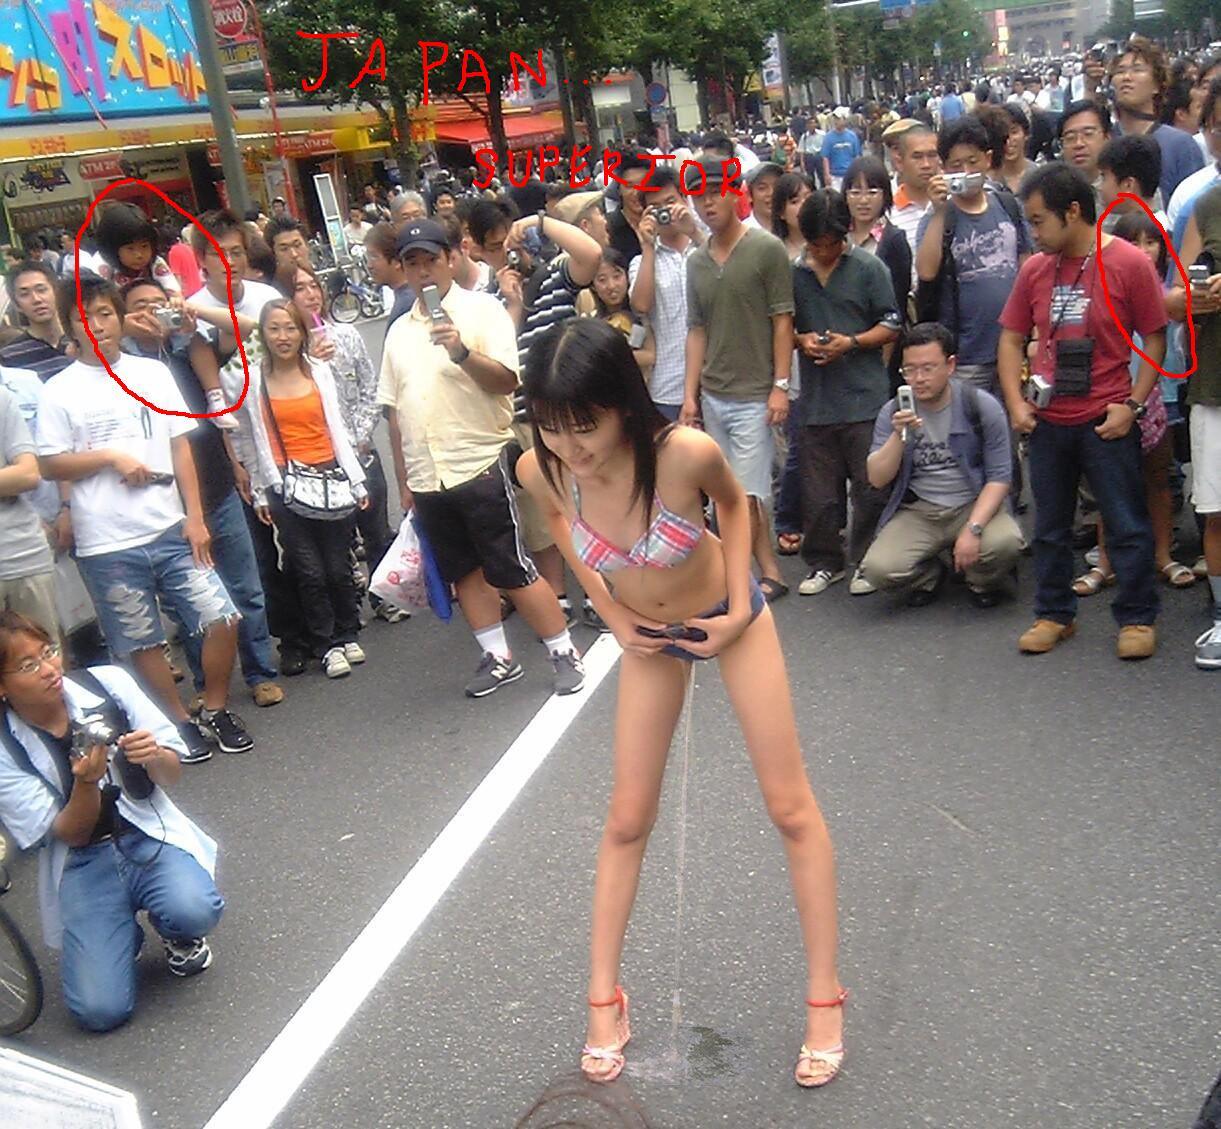 Asian public exhibitionist